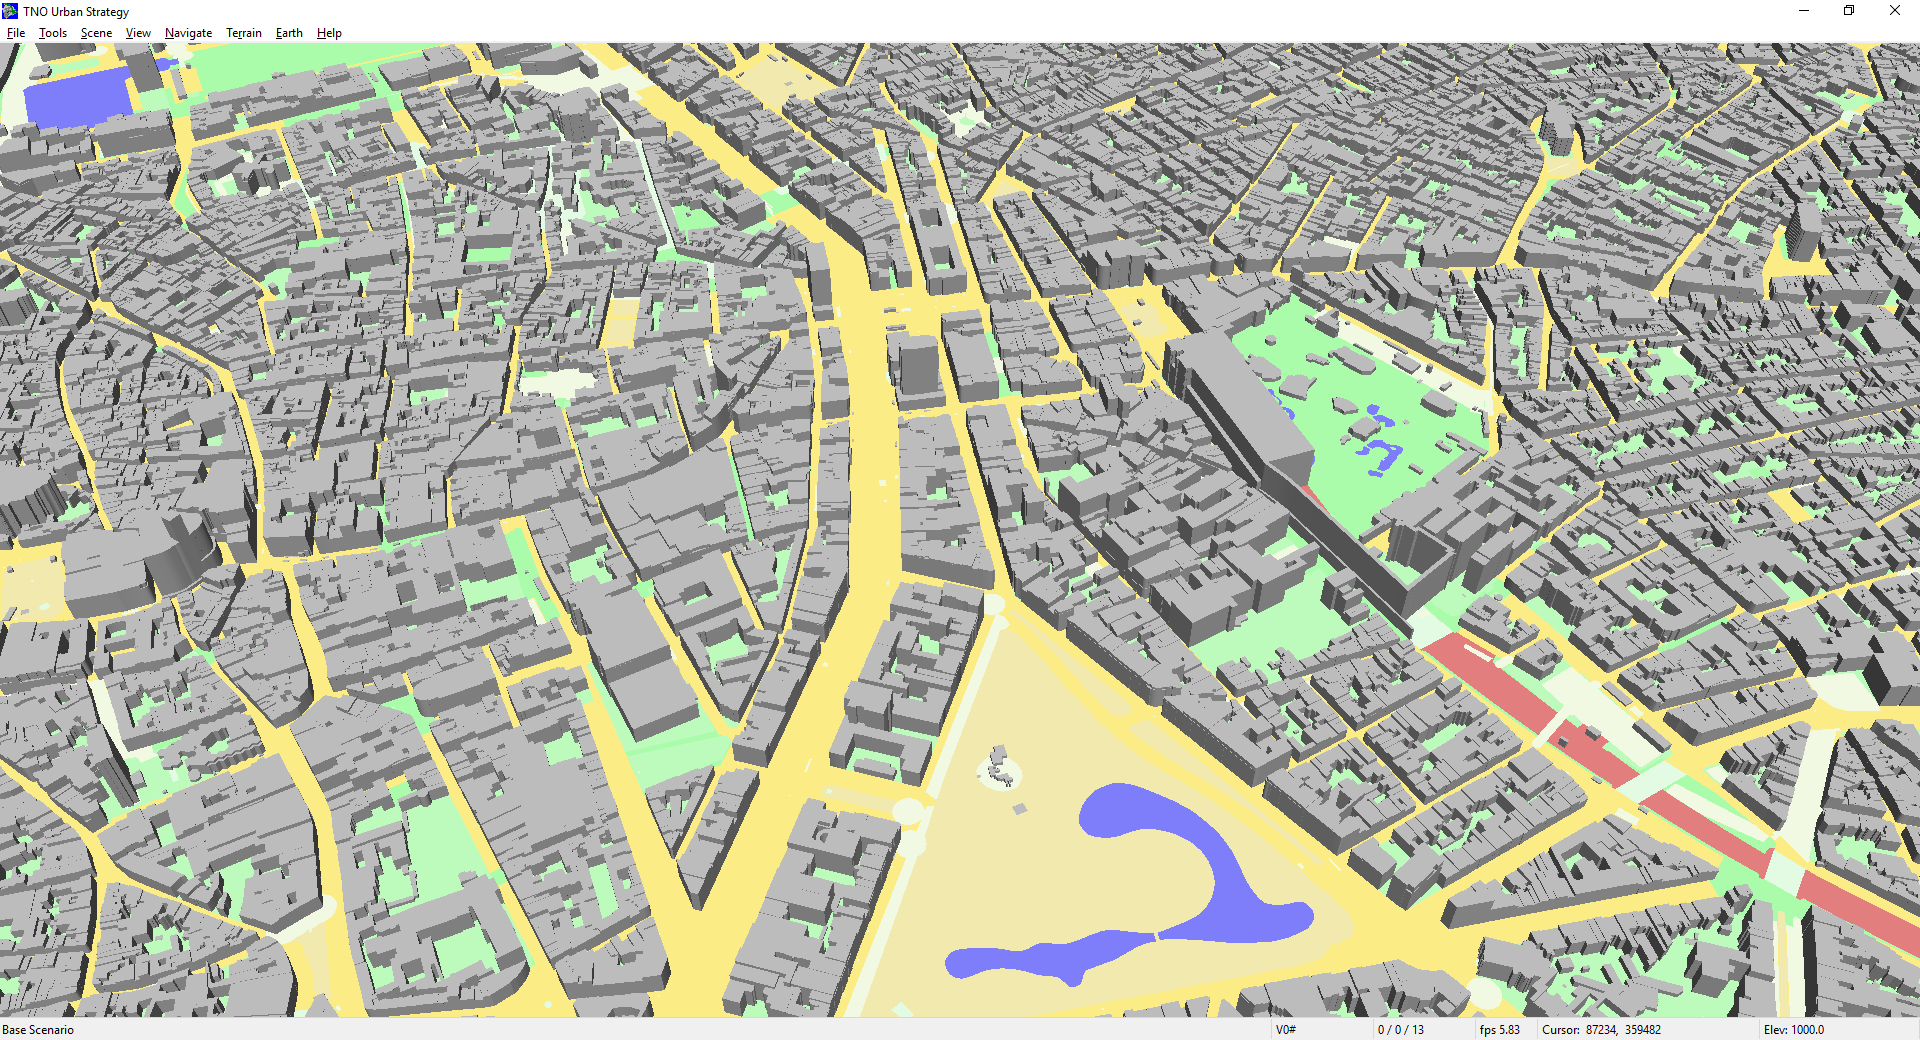 TNO Urban Strategy Antwerp